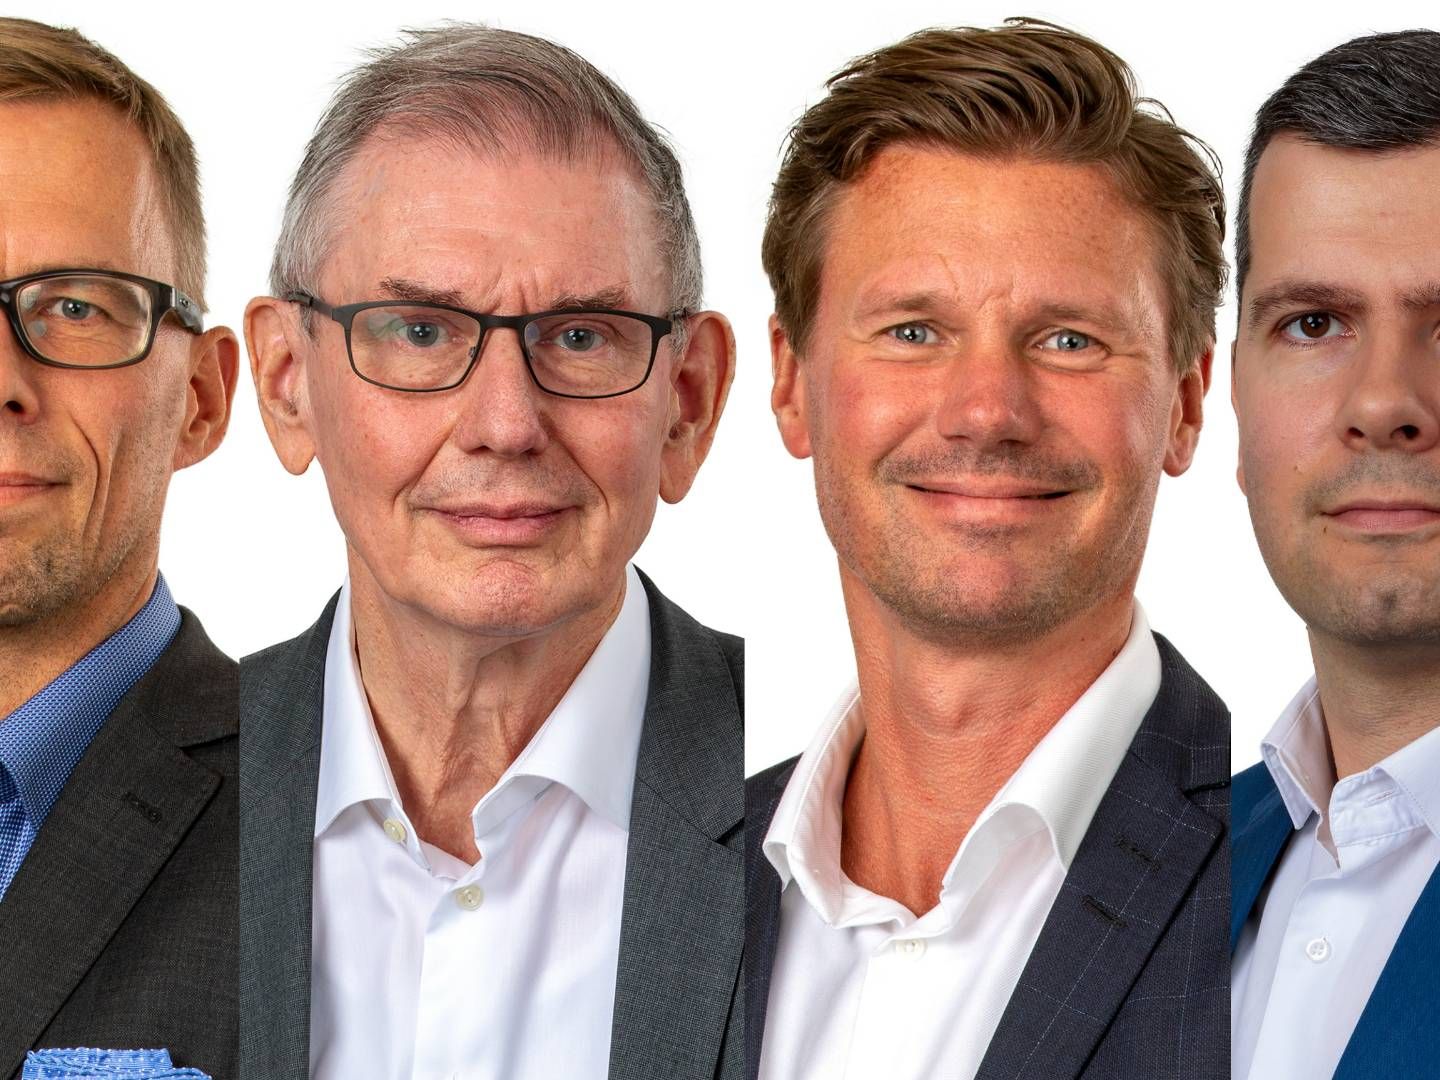 Left to right: Thomas Haugaard, , Bent Lystbæk, Jacob Ellinge Nielsen and Sorin Pirău. | Photo: PR / Janus Henderson